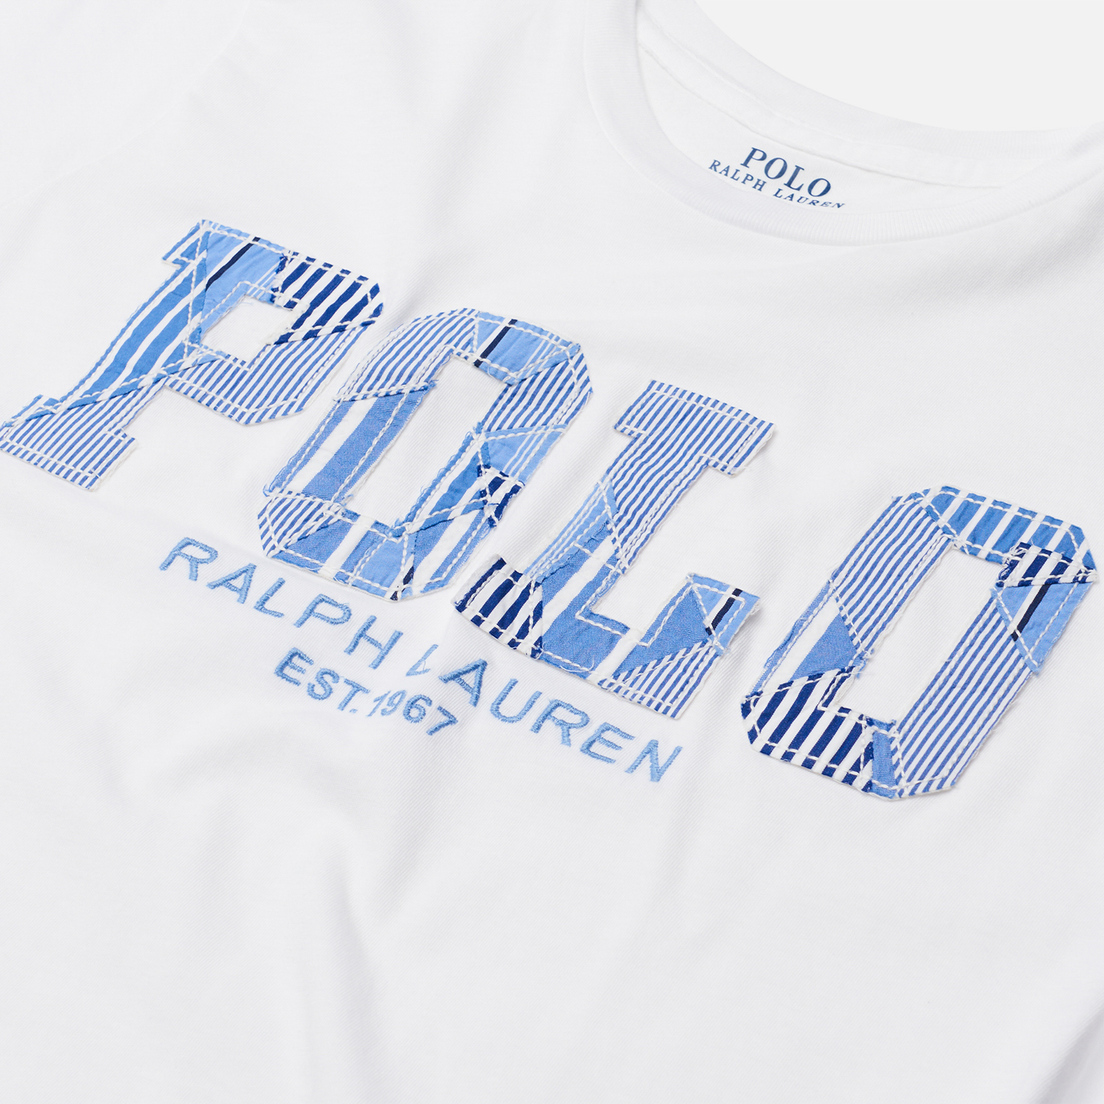 Polo Ralph Lauren Женская футболка Patchwork Printed Logo